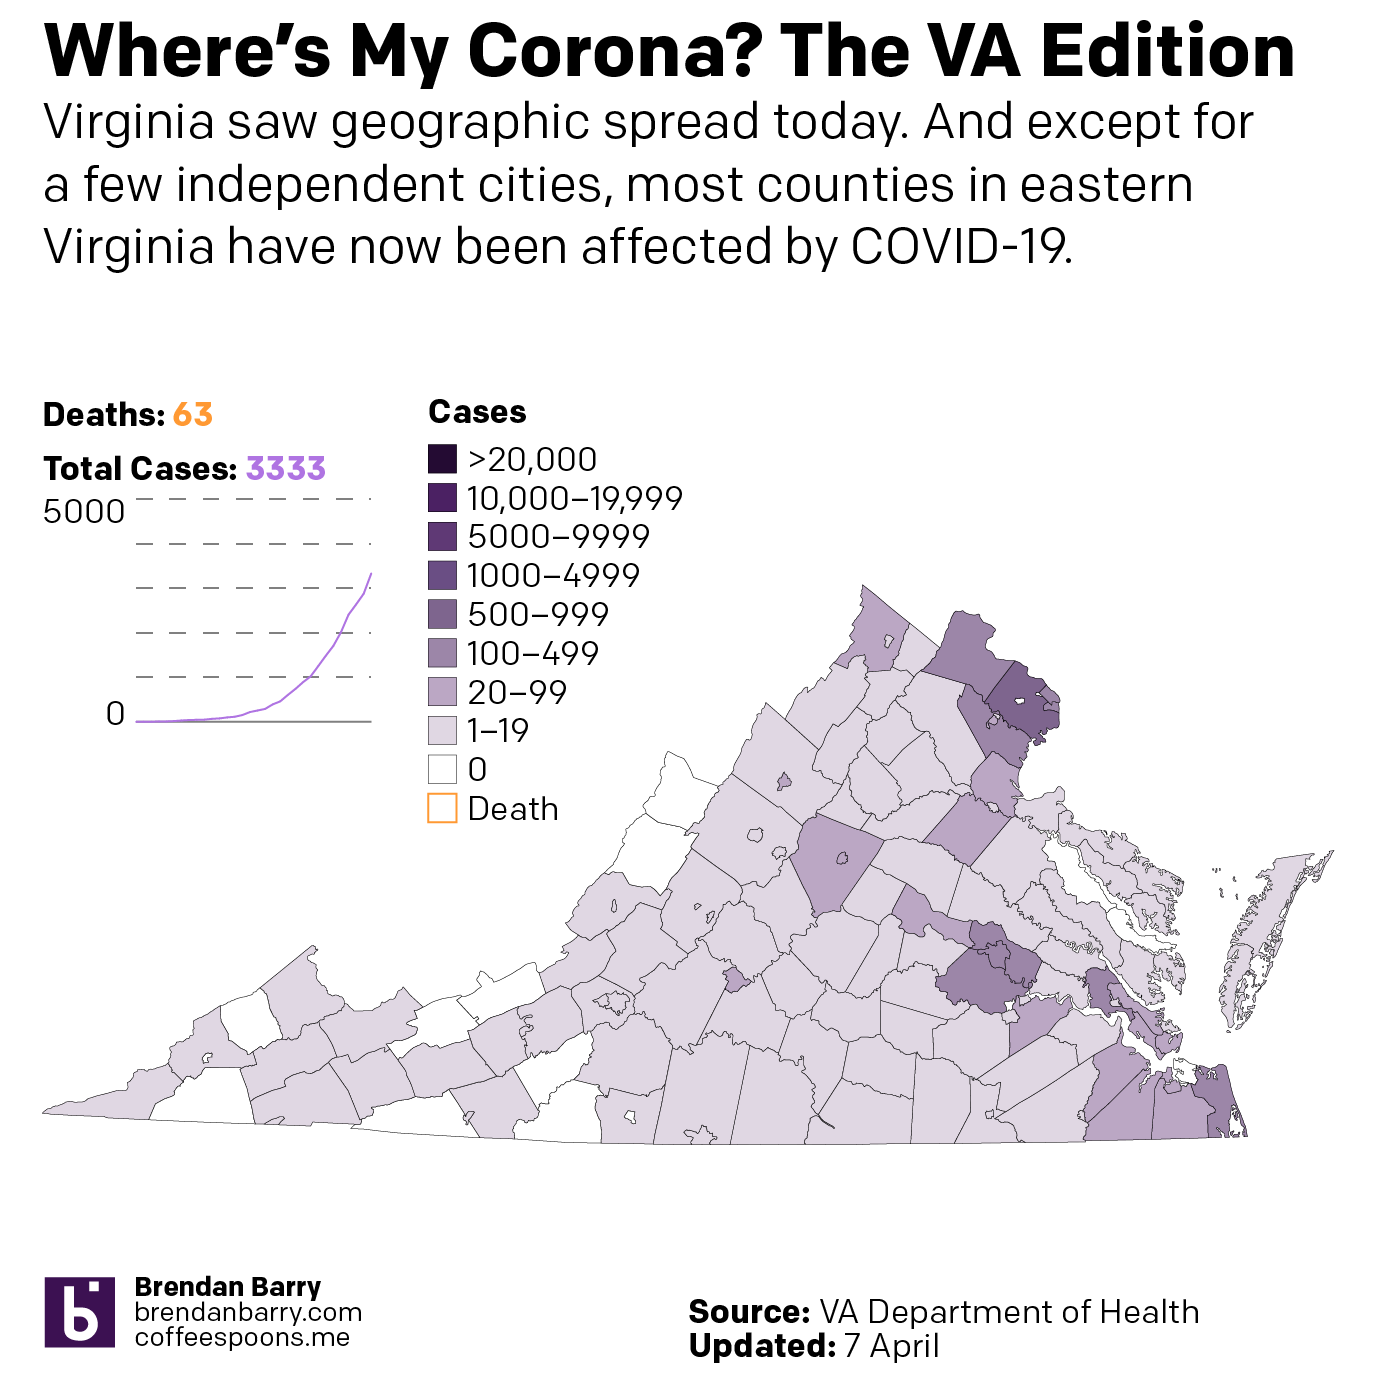 The condition in Virginia